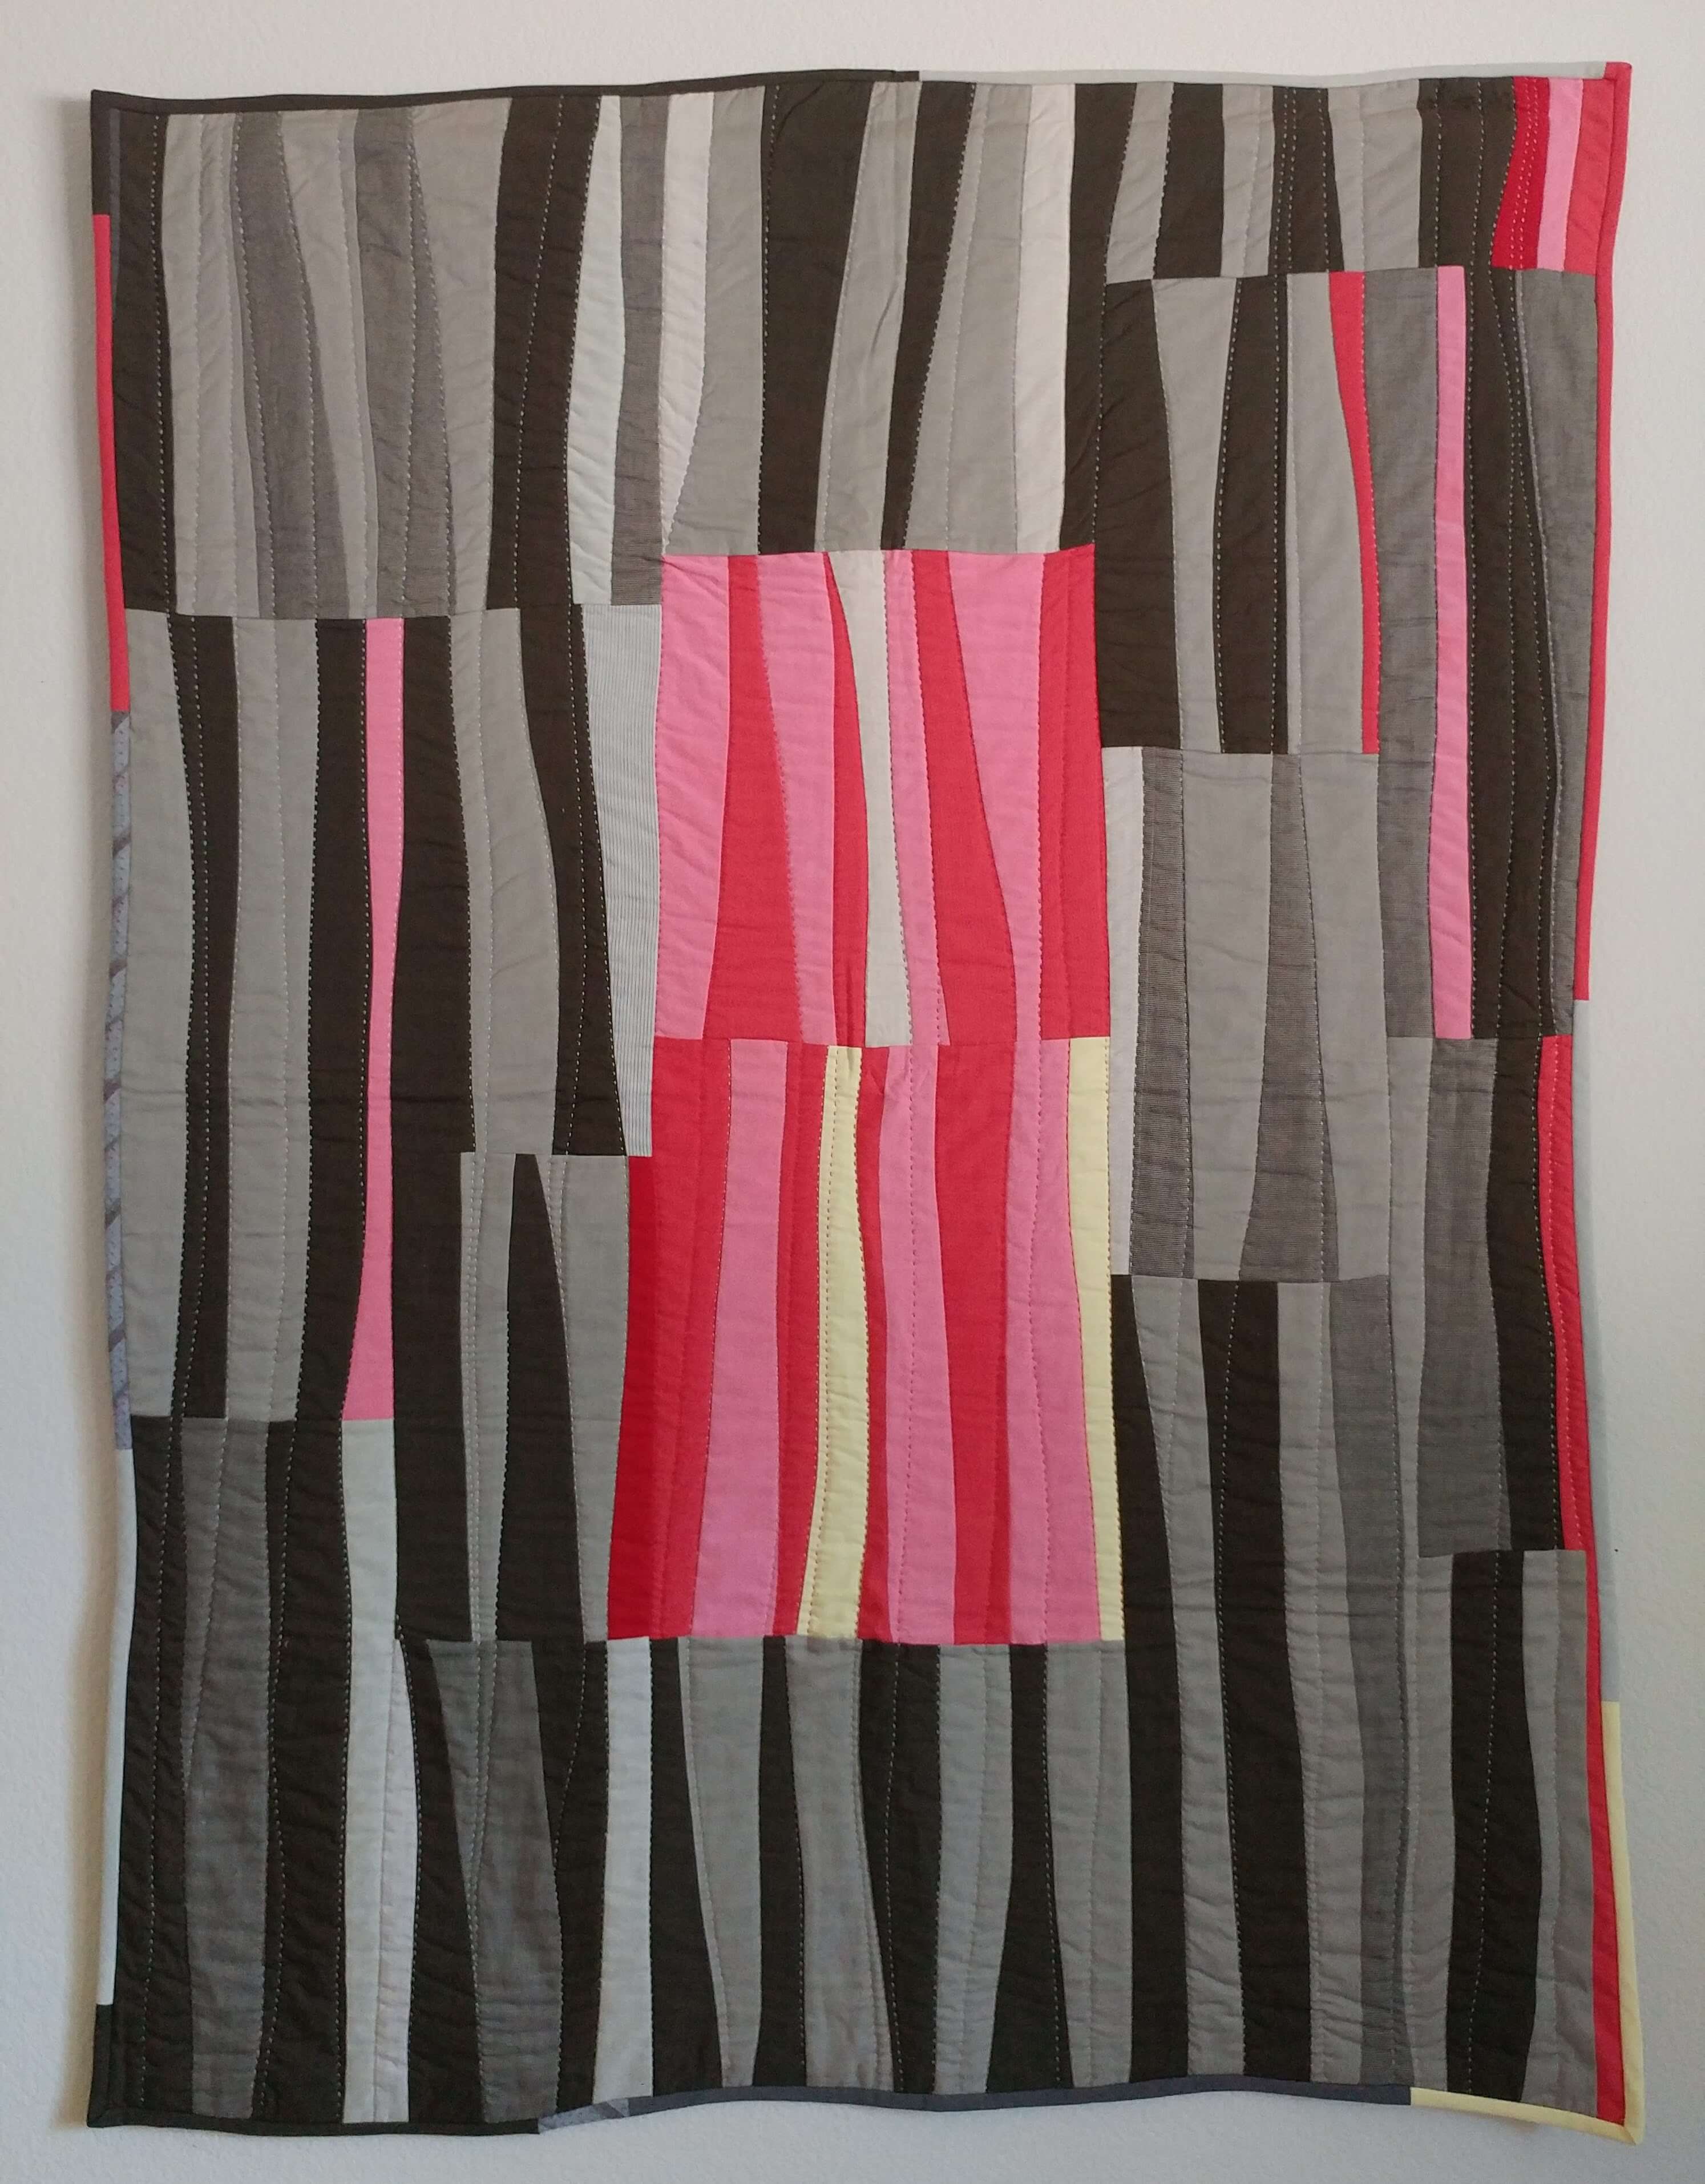 Kawandi quilt Grey and Pink by Sujata Shah, Makers' Retreats France Atelier Clos Mirabel.